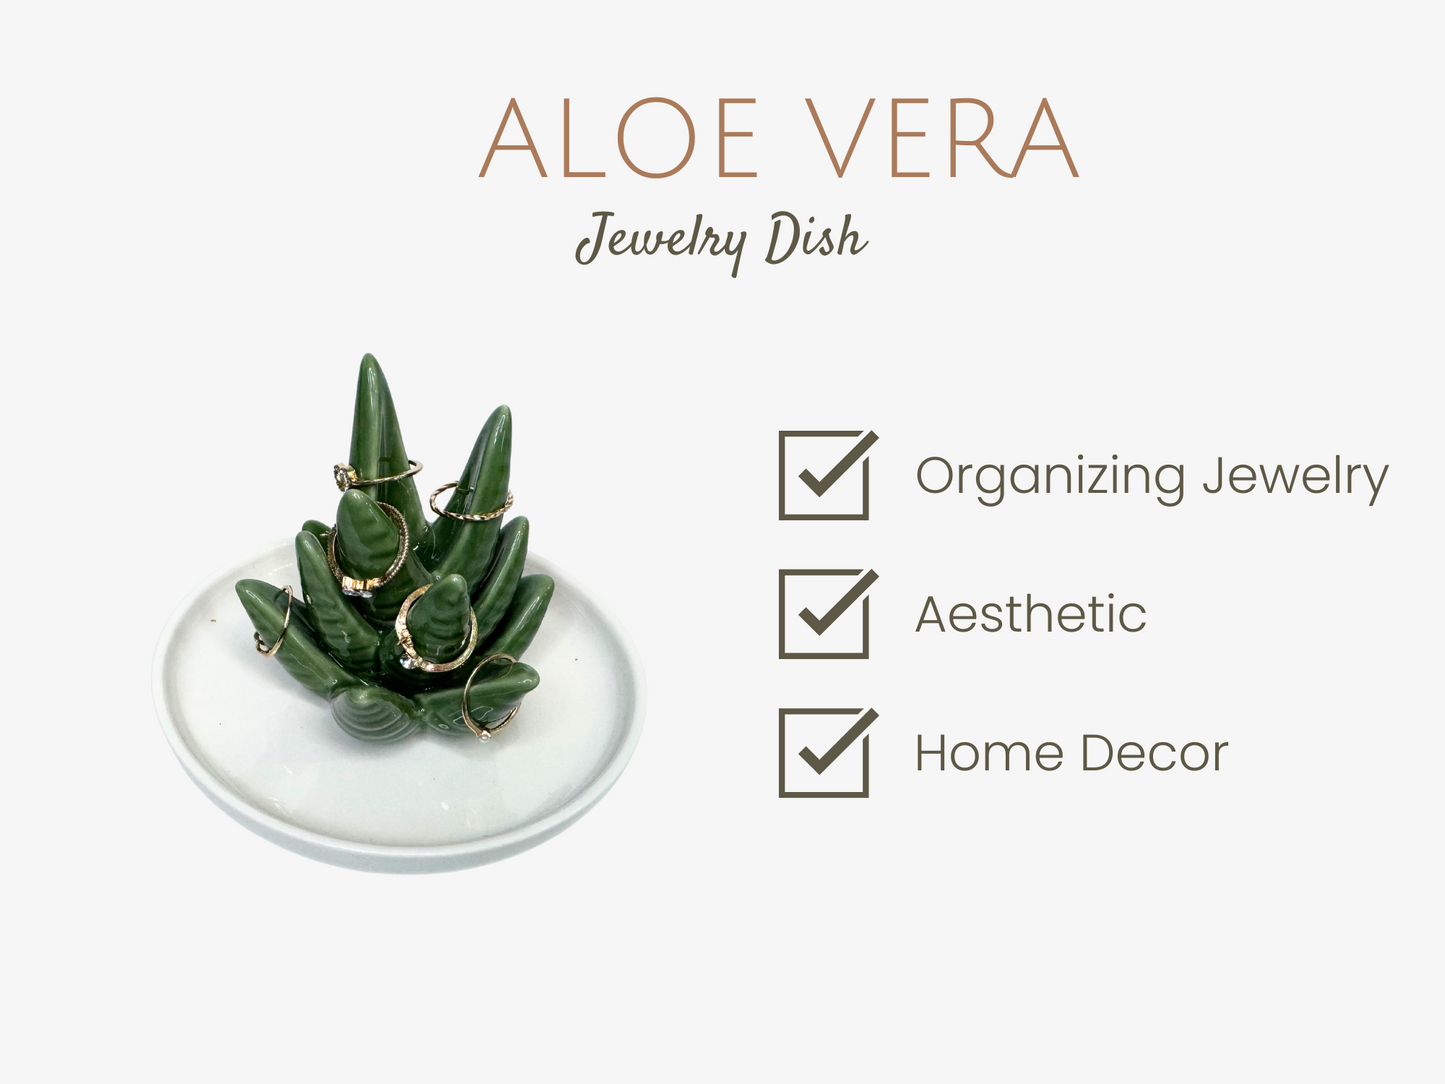 Aloe Vera Jewelry Dish